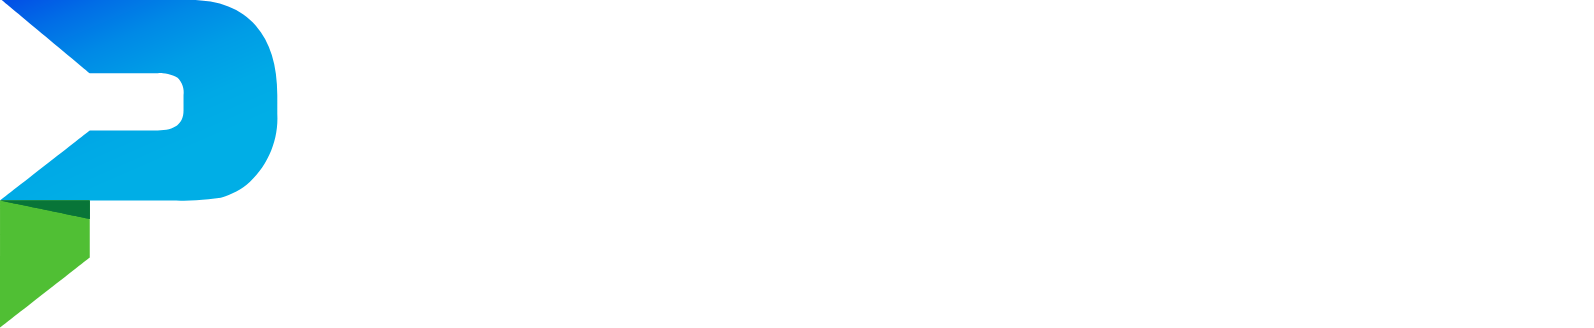 Parsons Logo groß für dunkle Hintergründe (transparentes PNG)